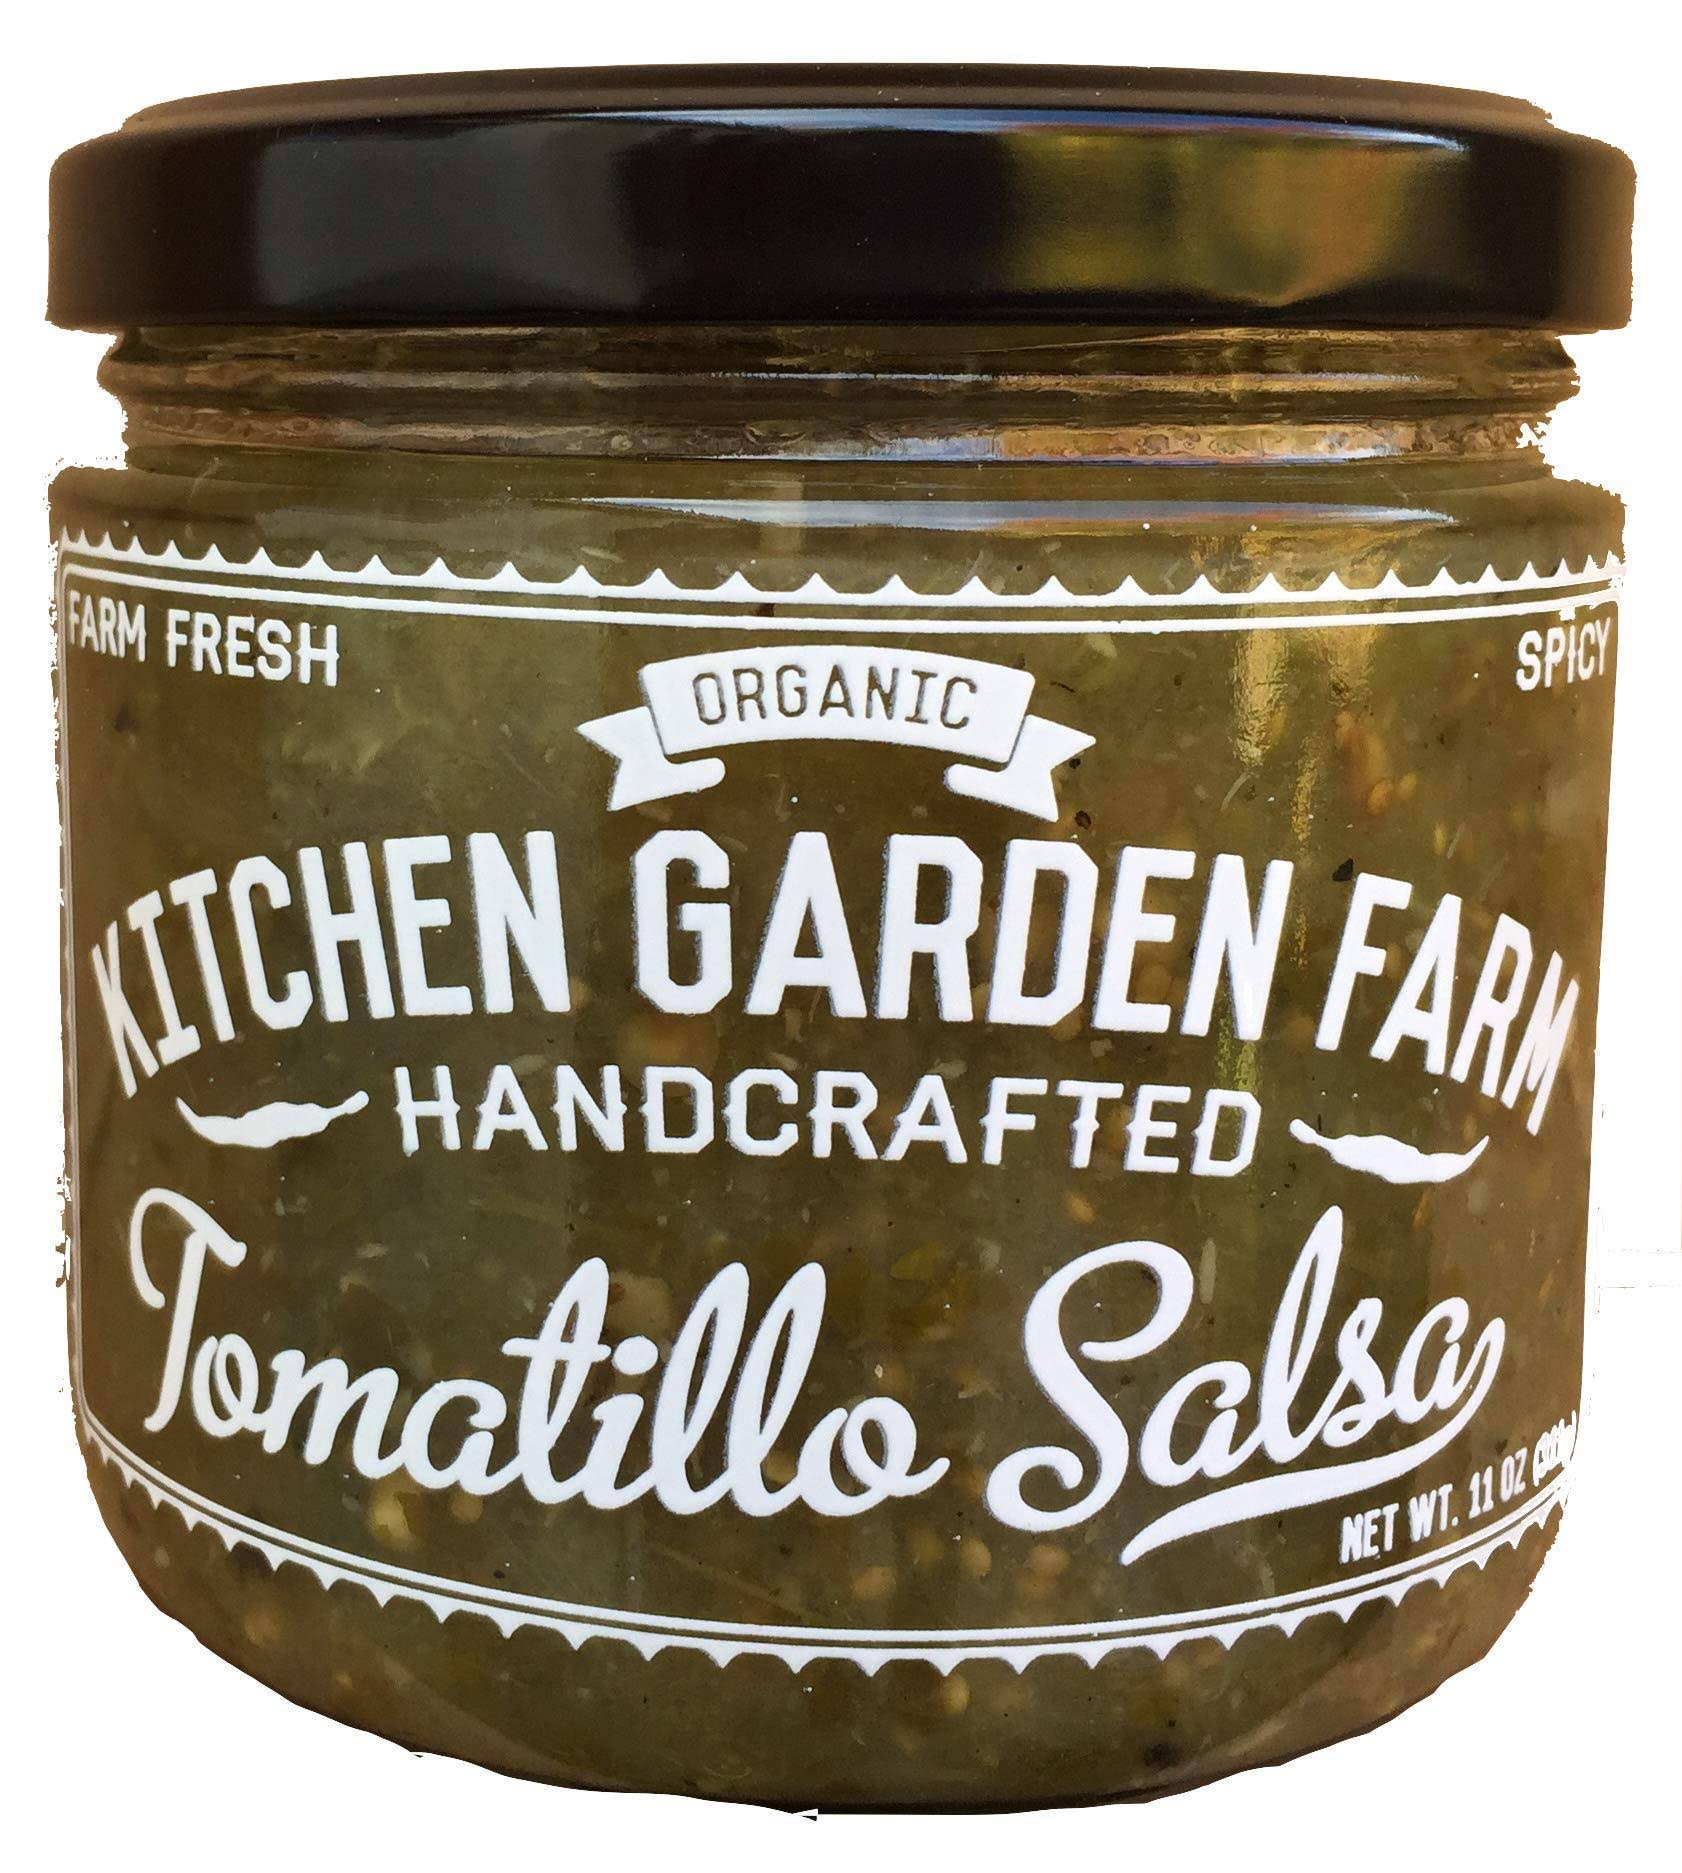 KITCHEN GARDEN Organic Salsa Tomatillo, 11 OZ